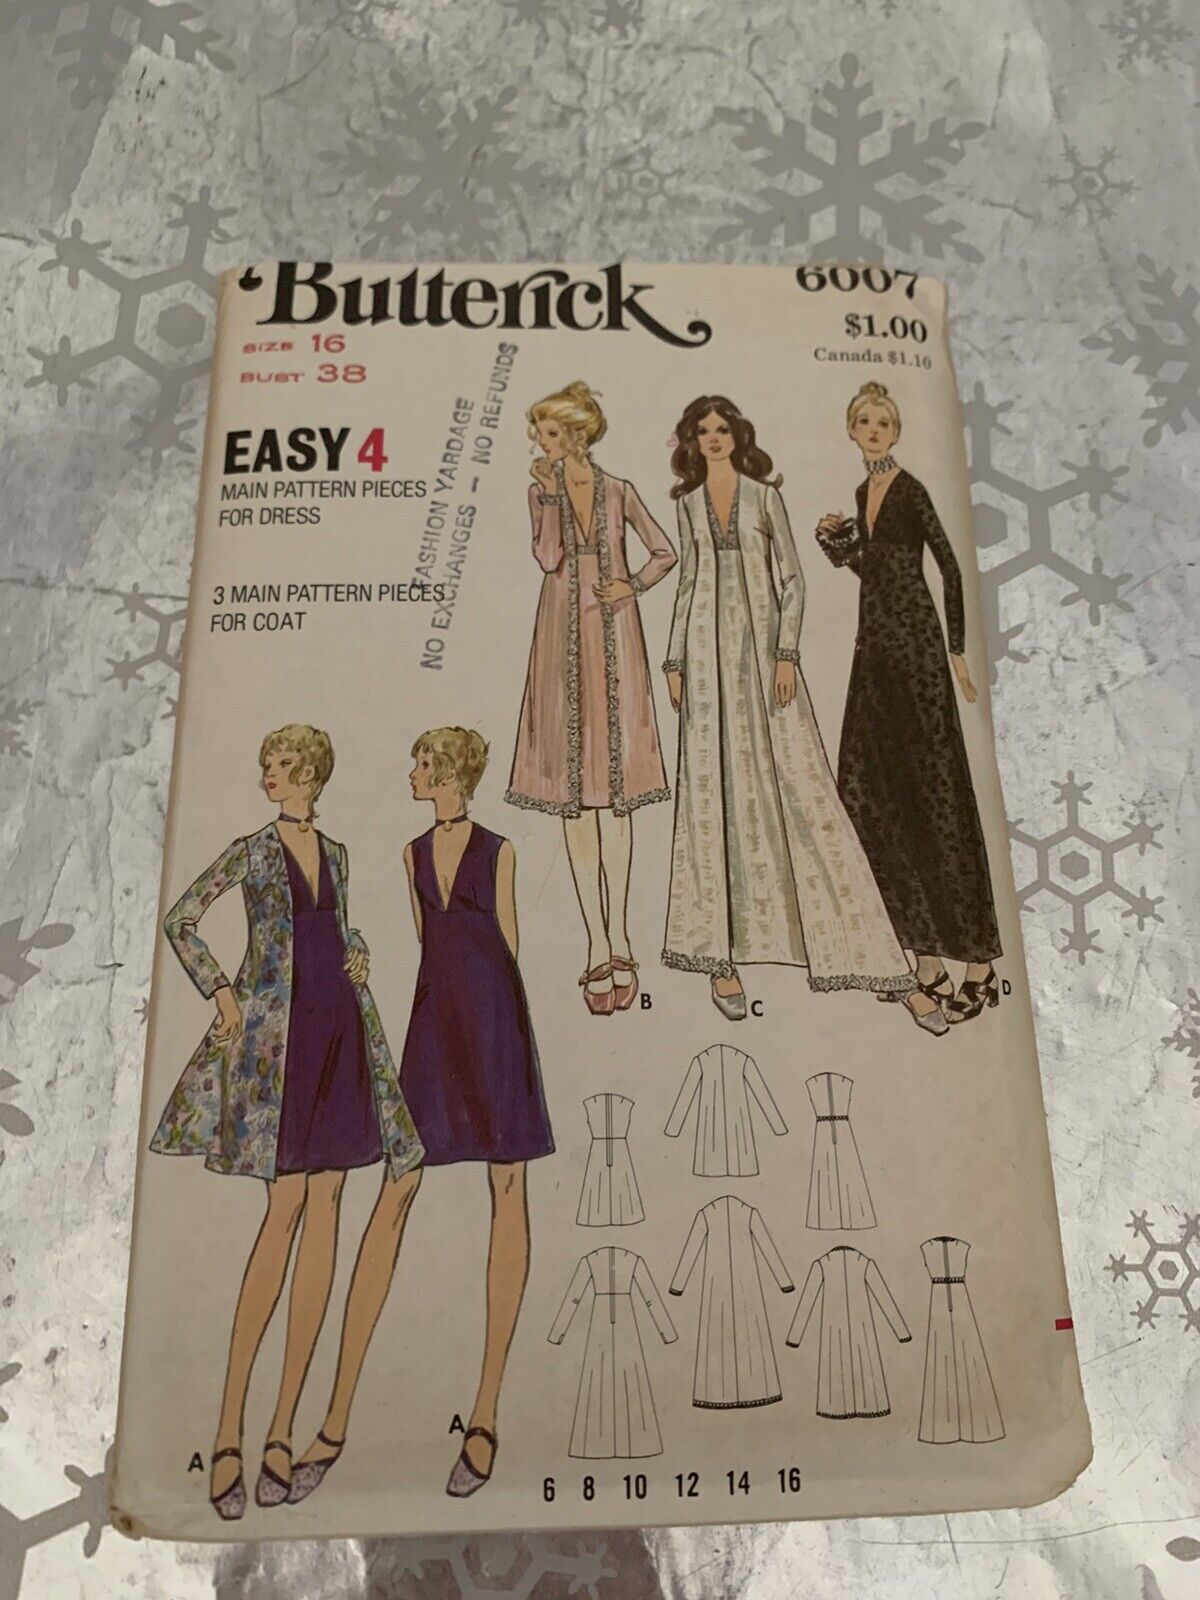 ❤️Vintage Uncut Butterick 6007 EASY Sew Pattern Dress & Coat Size 16